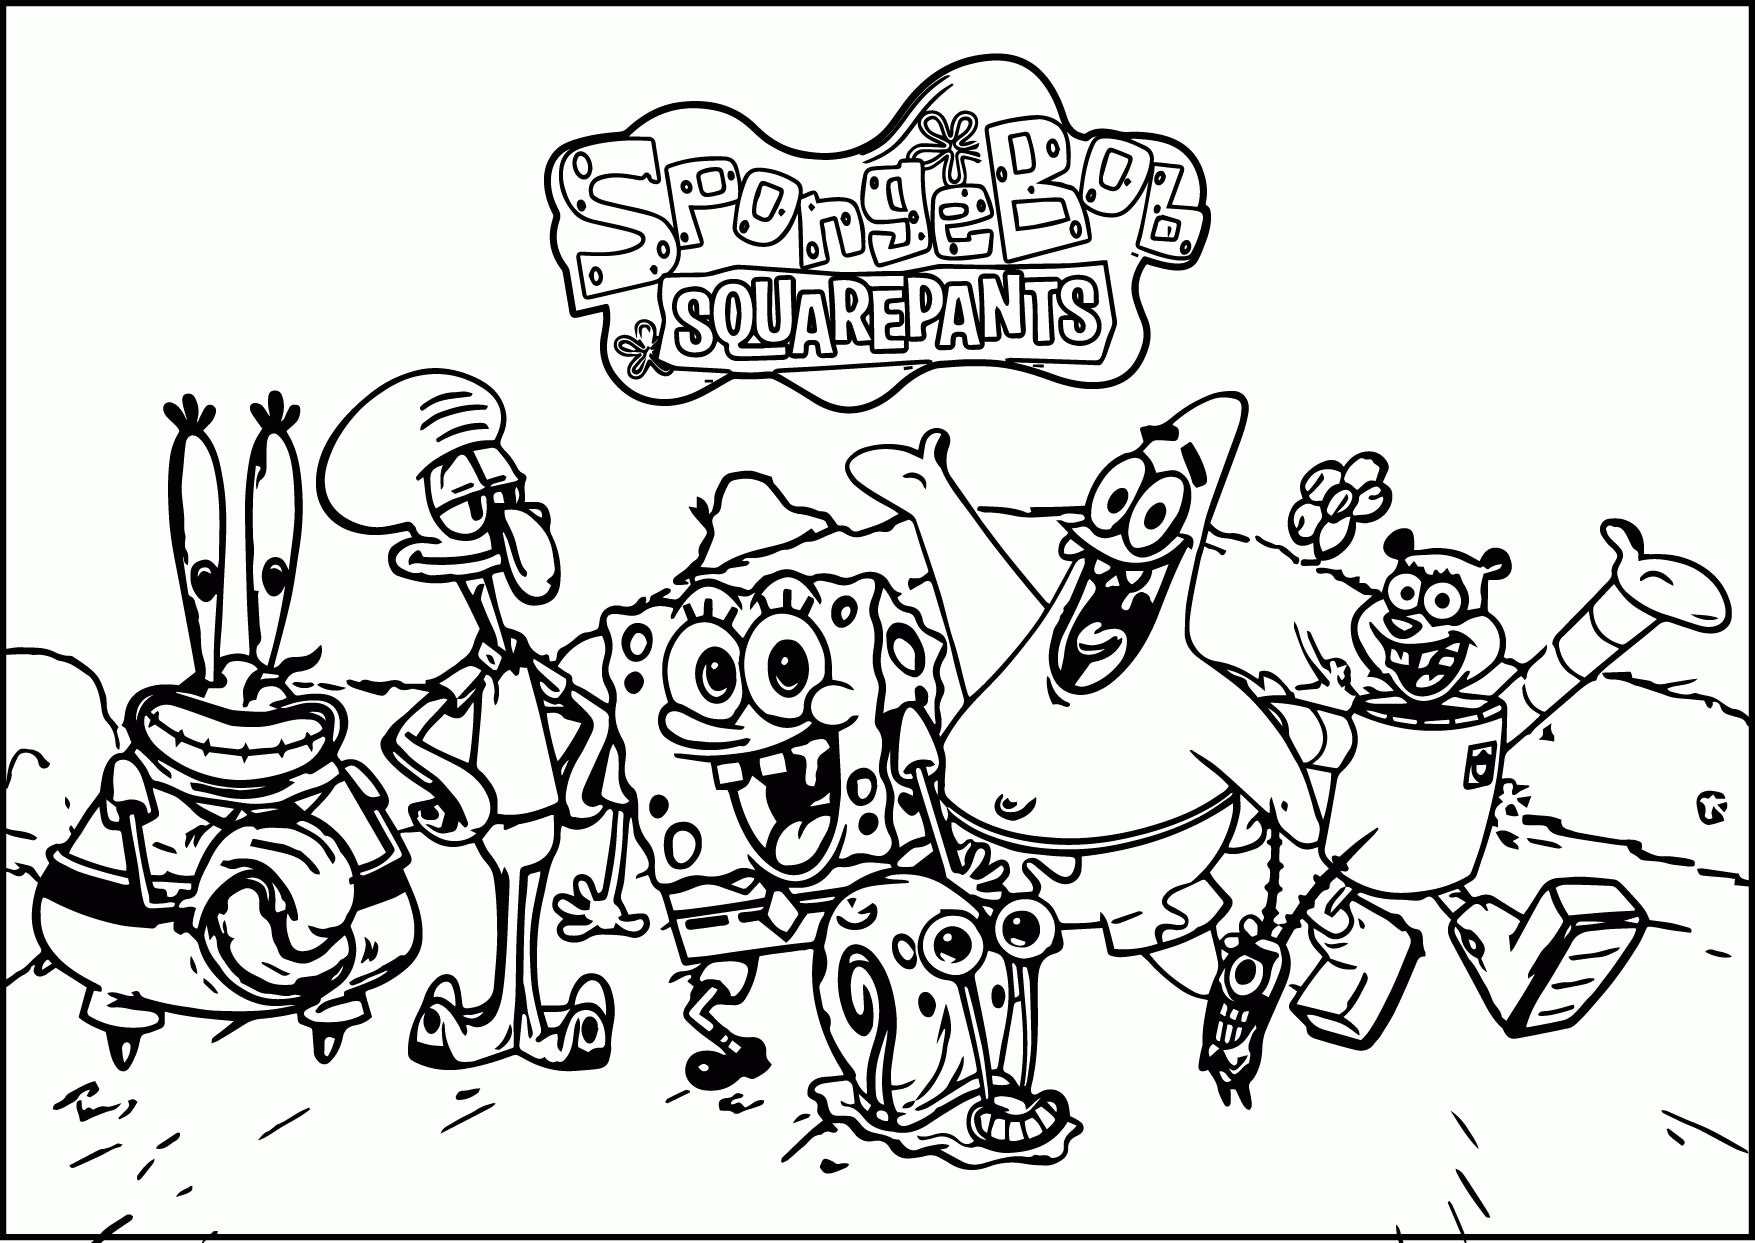 spongebob squarepants coloring pages free printable spongebob squarepants coloring pages for kids squarepants pages spongebob coloring 